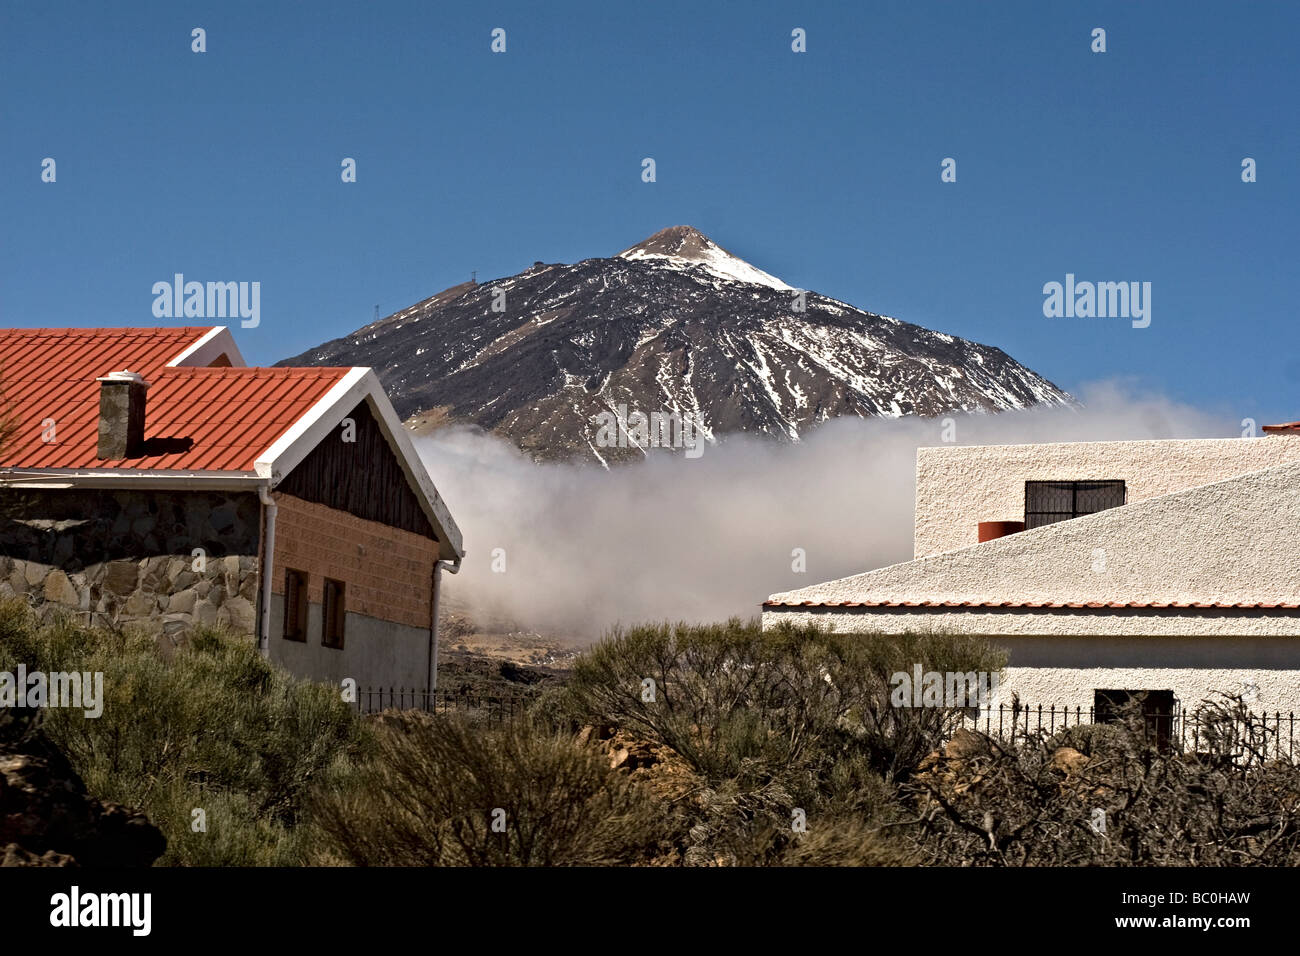 El Teide Volcano in Tenerife, Spain. Stock Photo